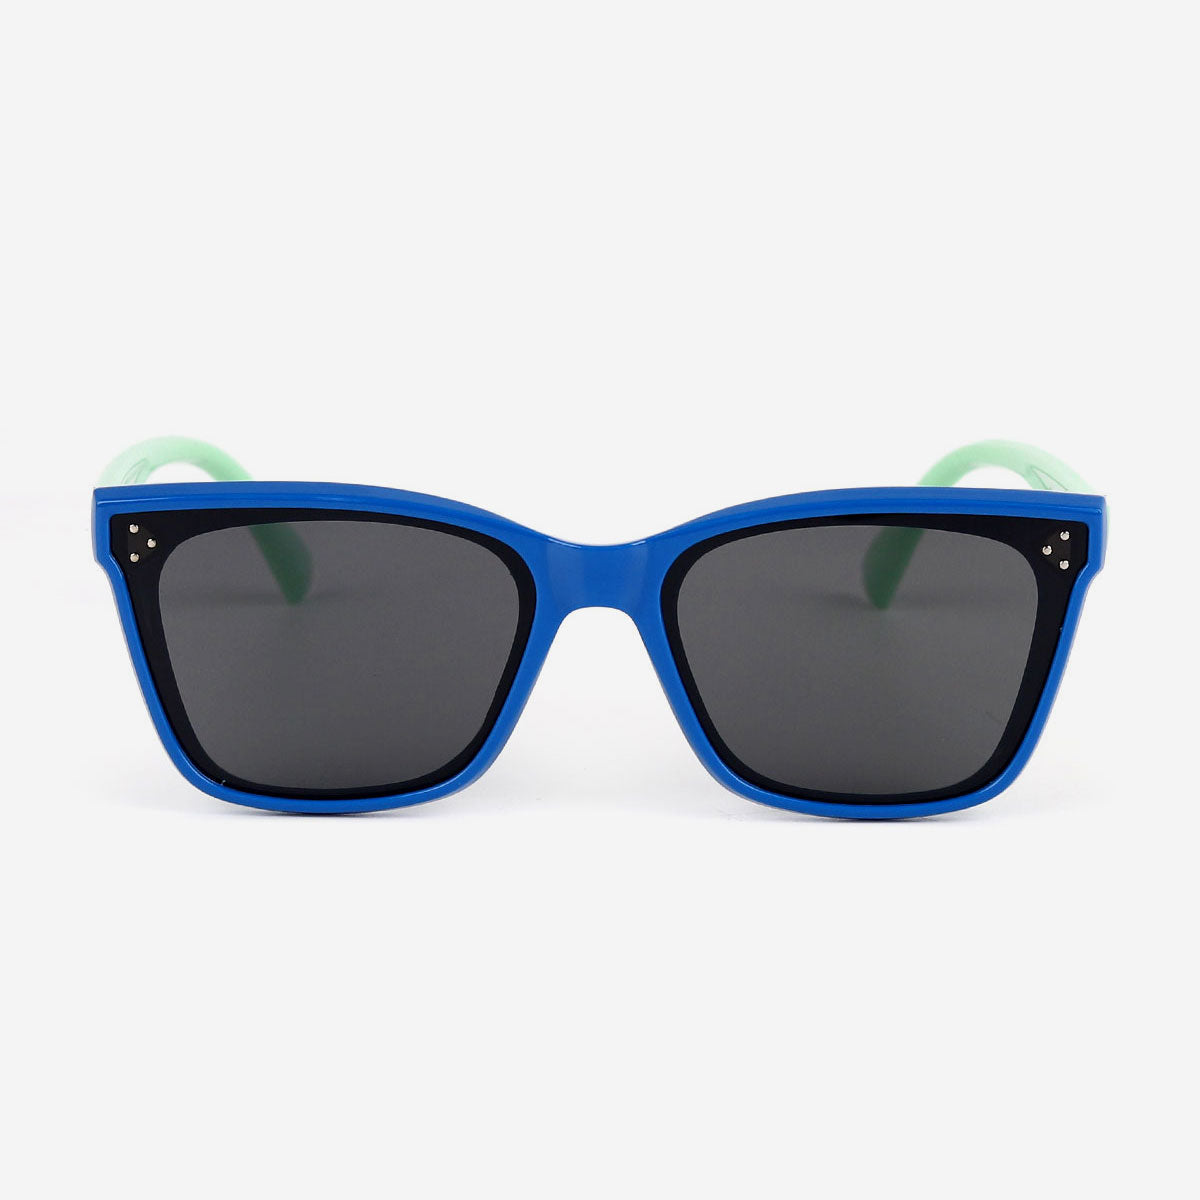 Avery - Polarized Navigator Kids Sunglasses Aged 3-10 UV